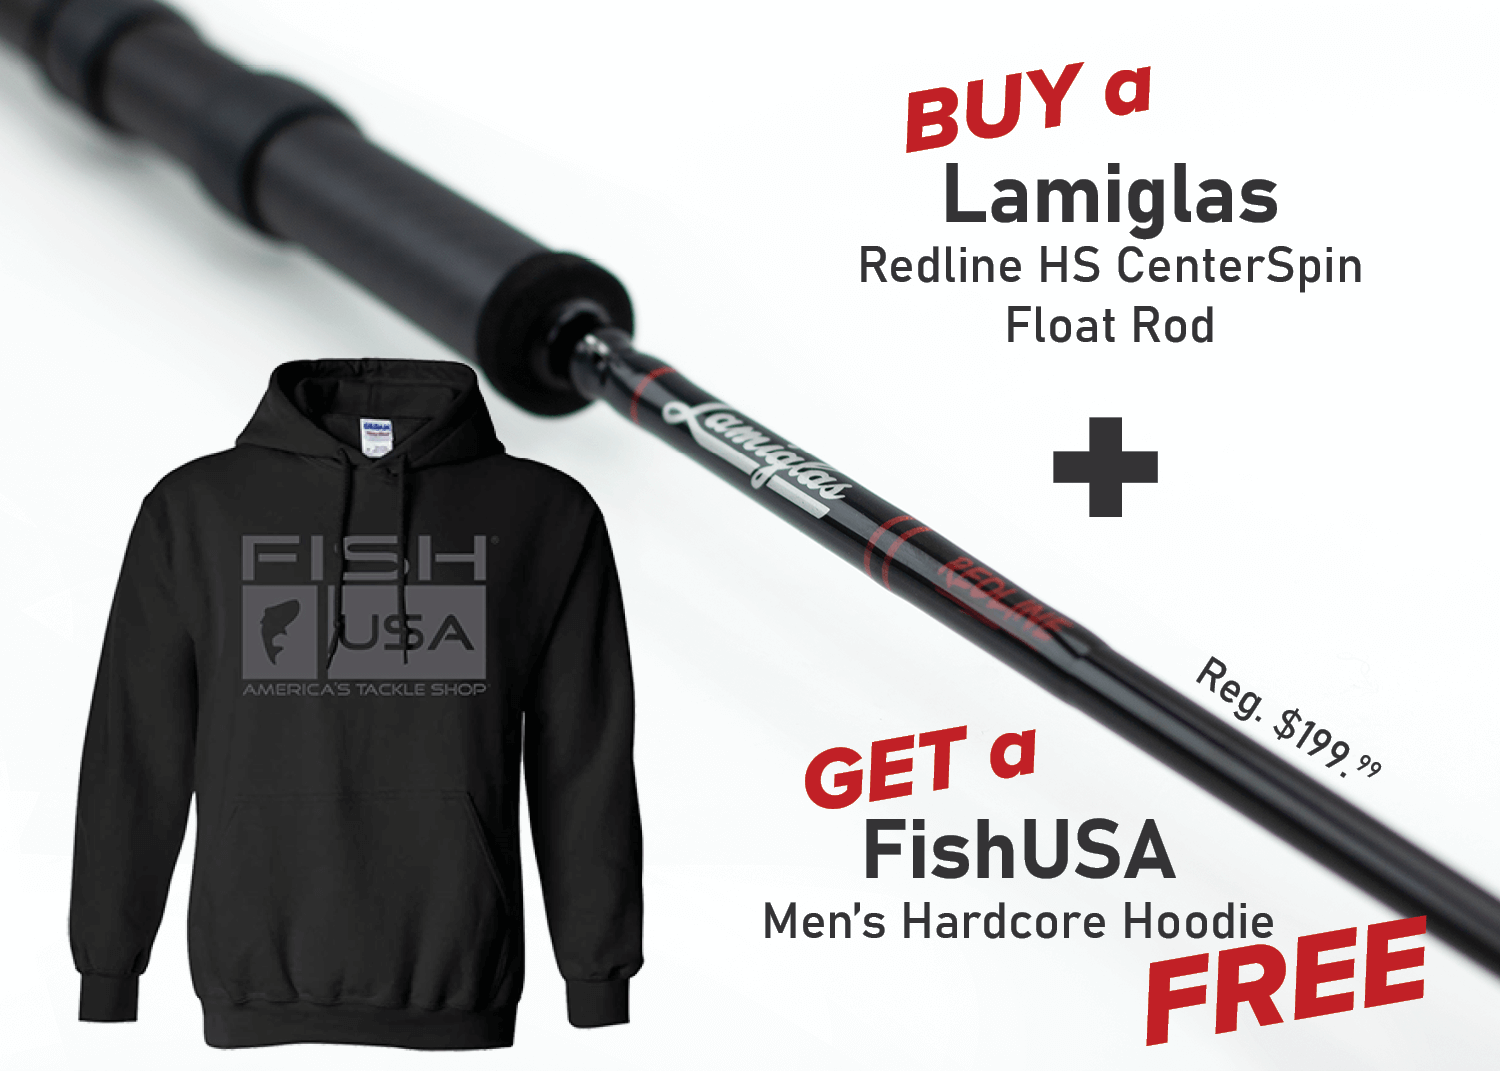 Buy a Lamiglas Redline HS CenterSpin Float Rod & Get a FREE FishUSA Men's Hardcore Hoodie